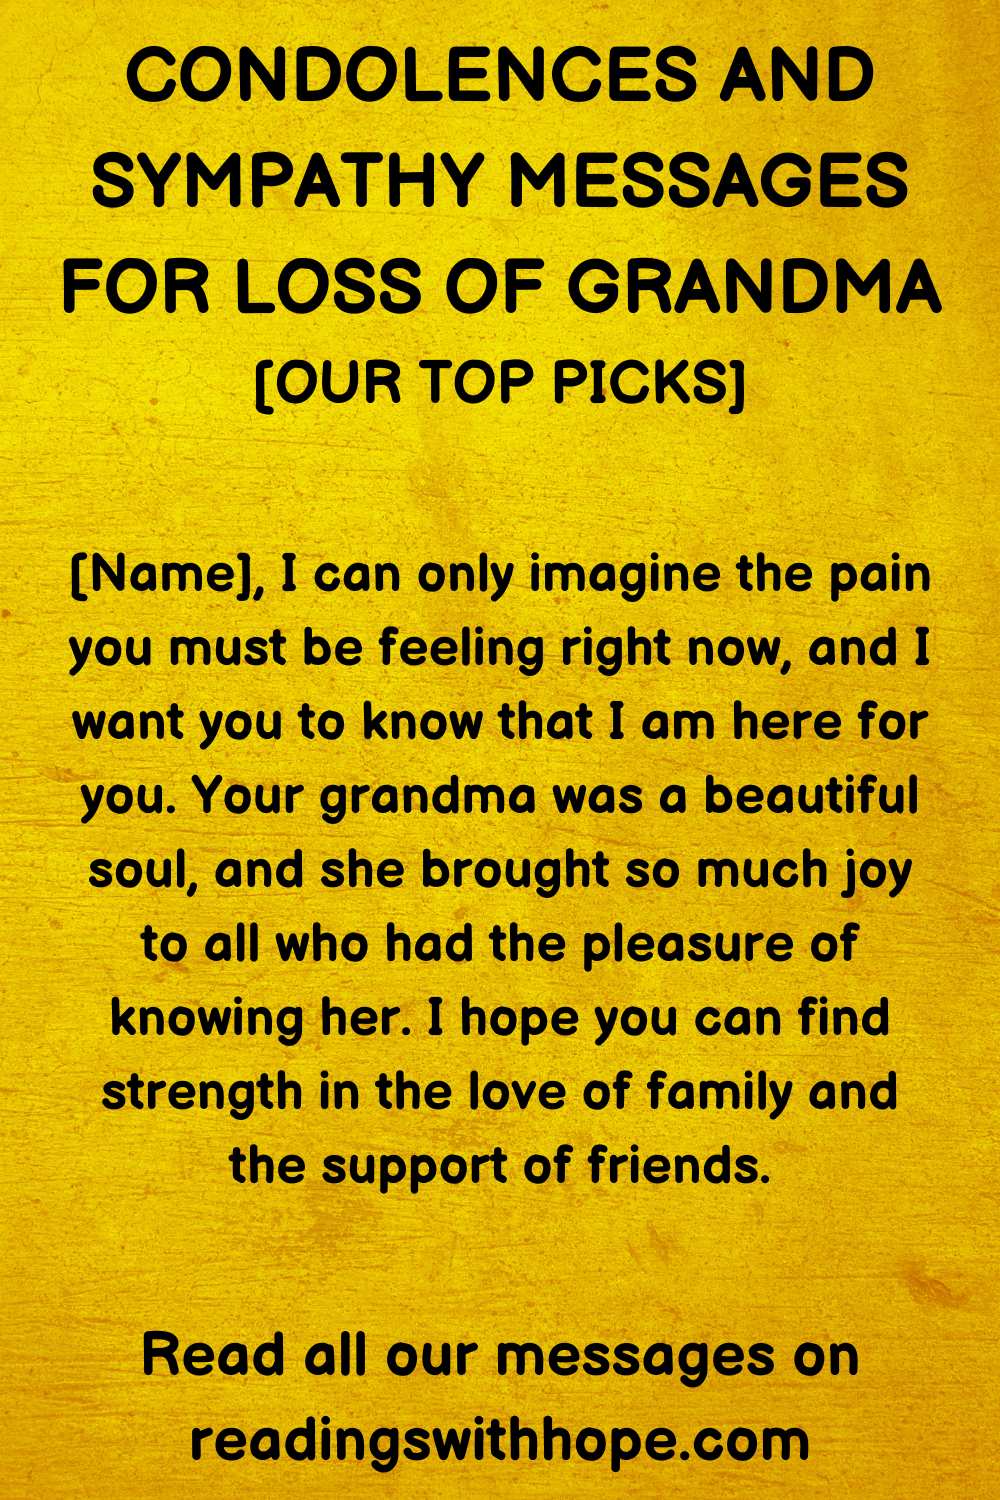 Condolences and Sympathy Message for Loss of Grandma